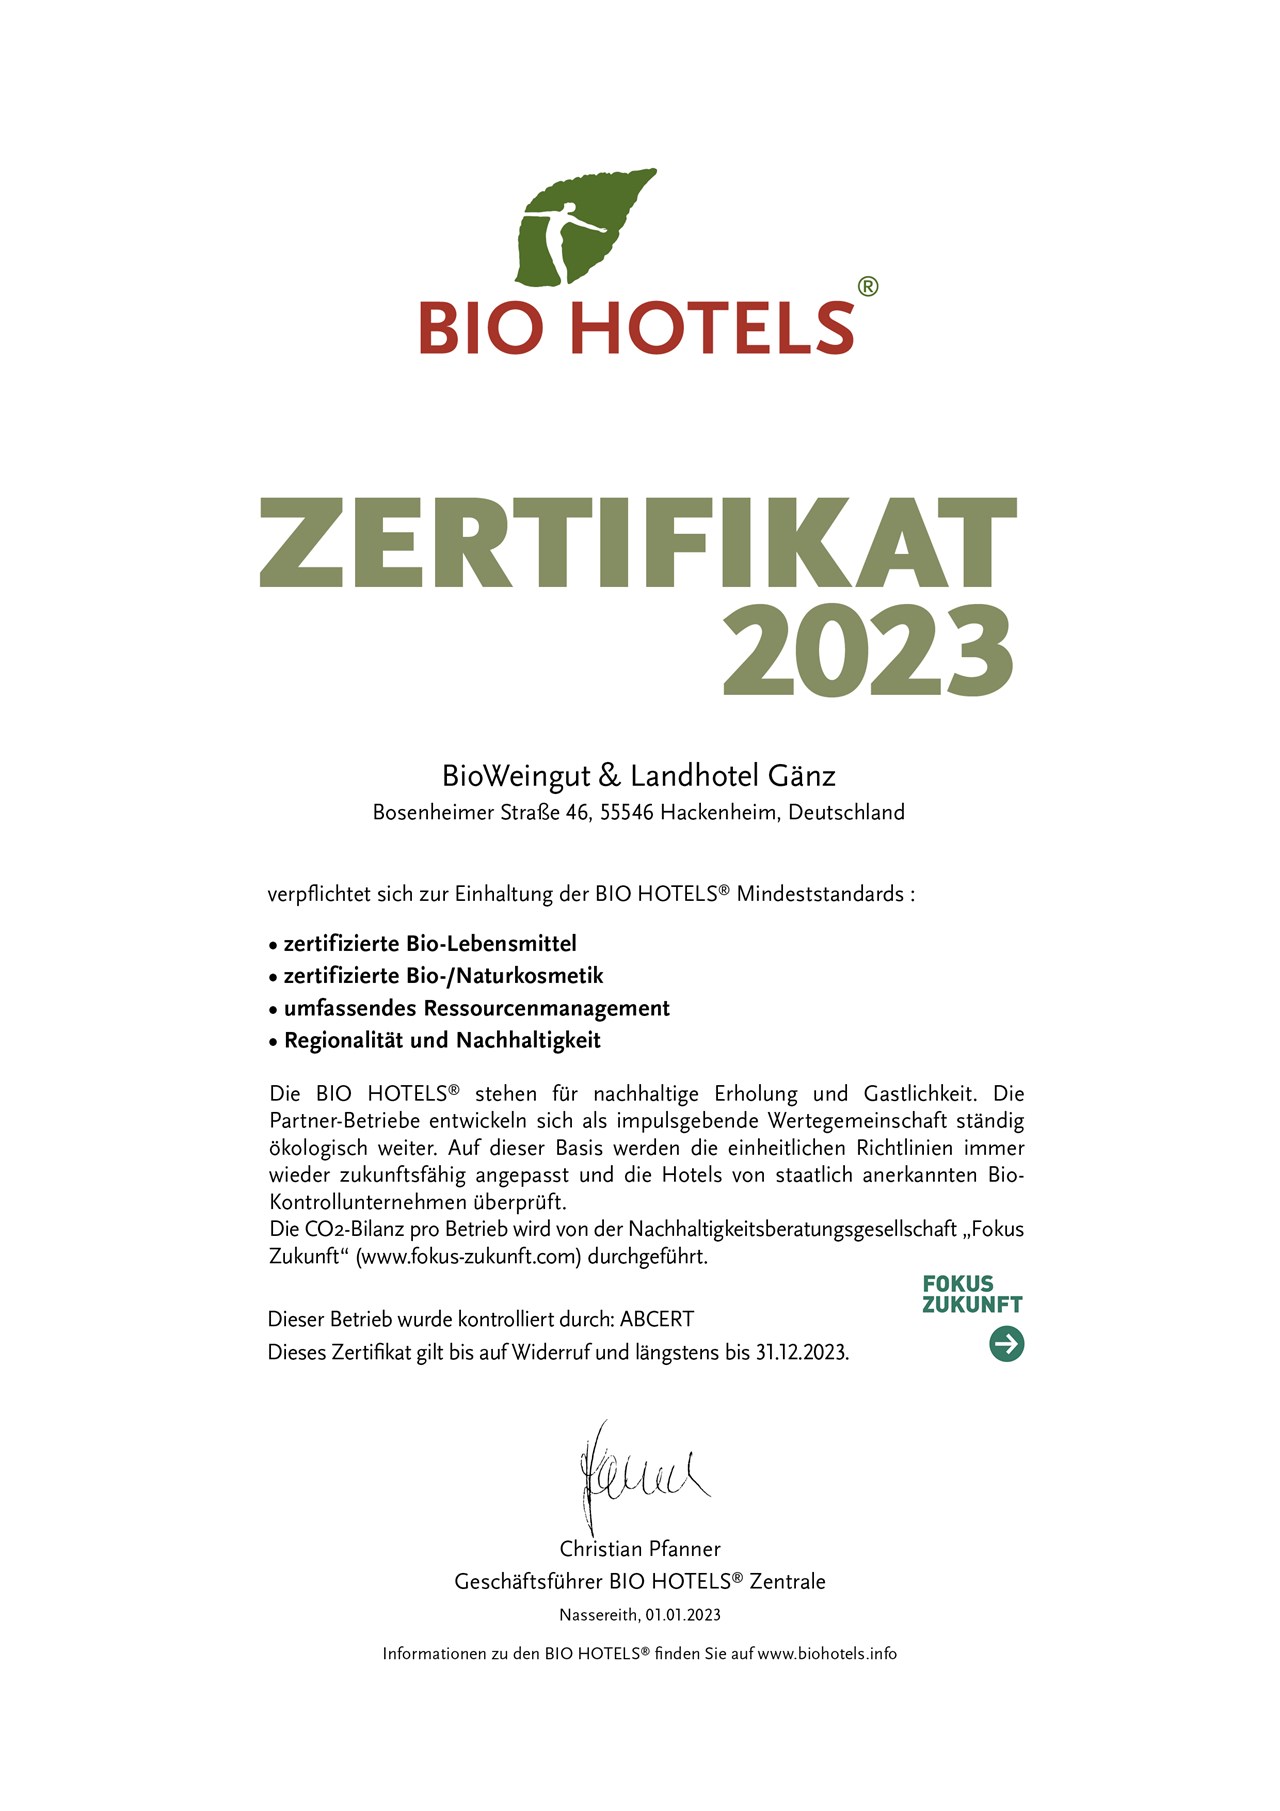 BioWeingut & Landhotel Gänz Evidence certificates BIO HOTELS® certificate